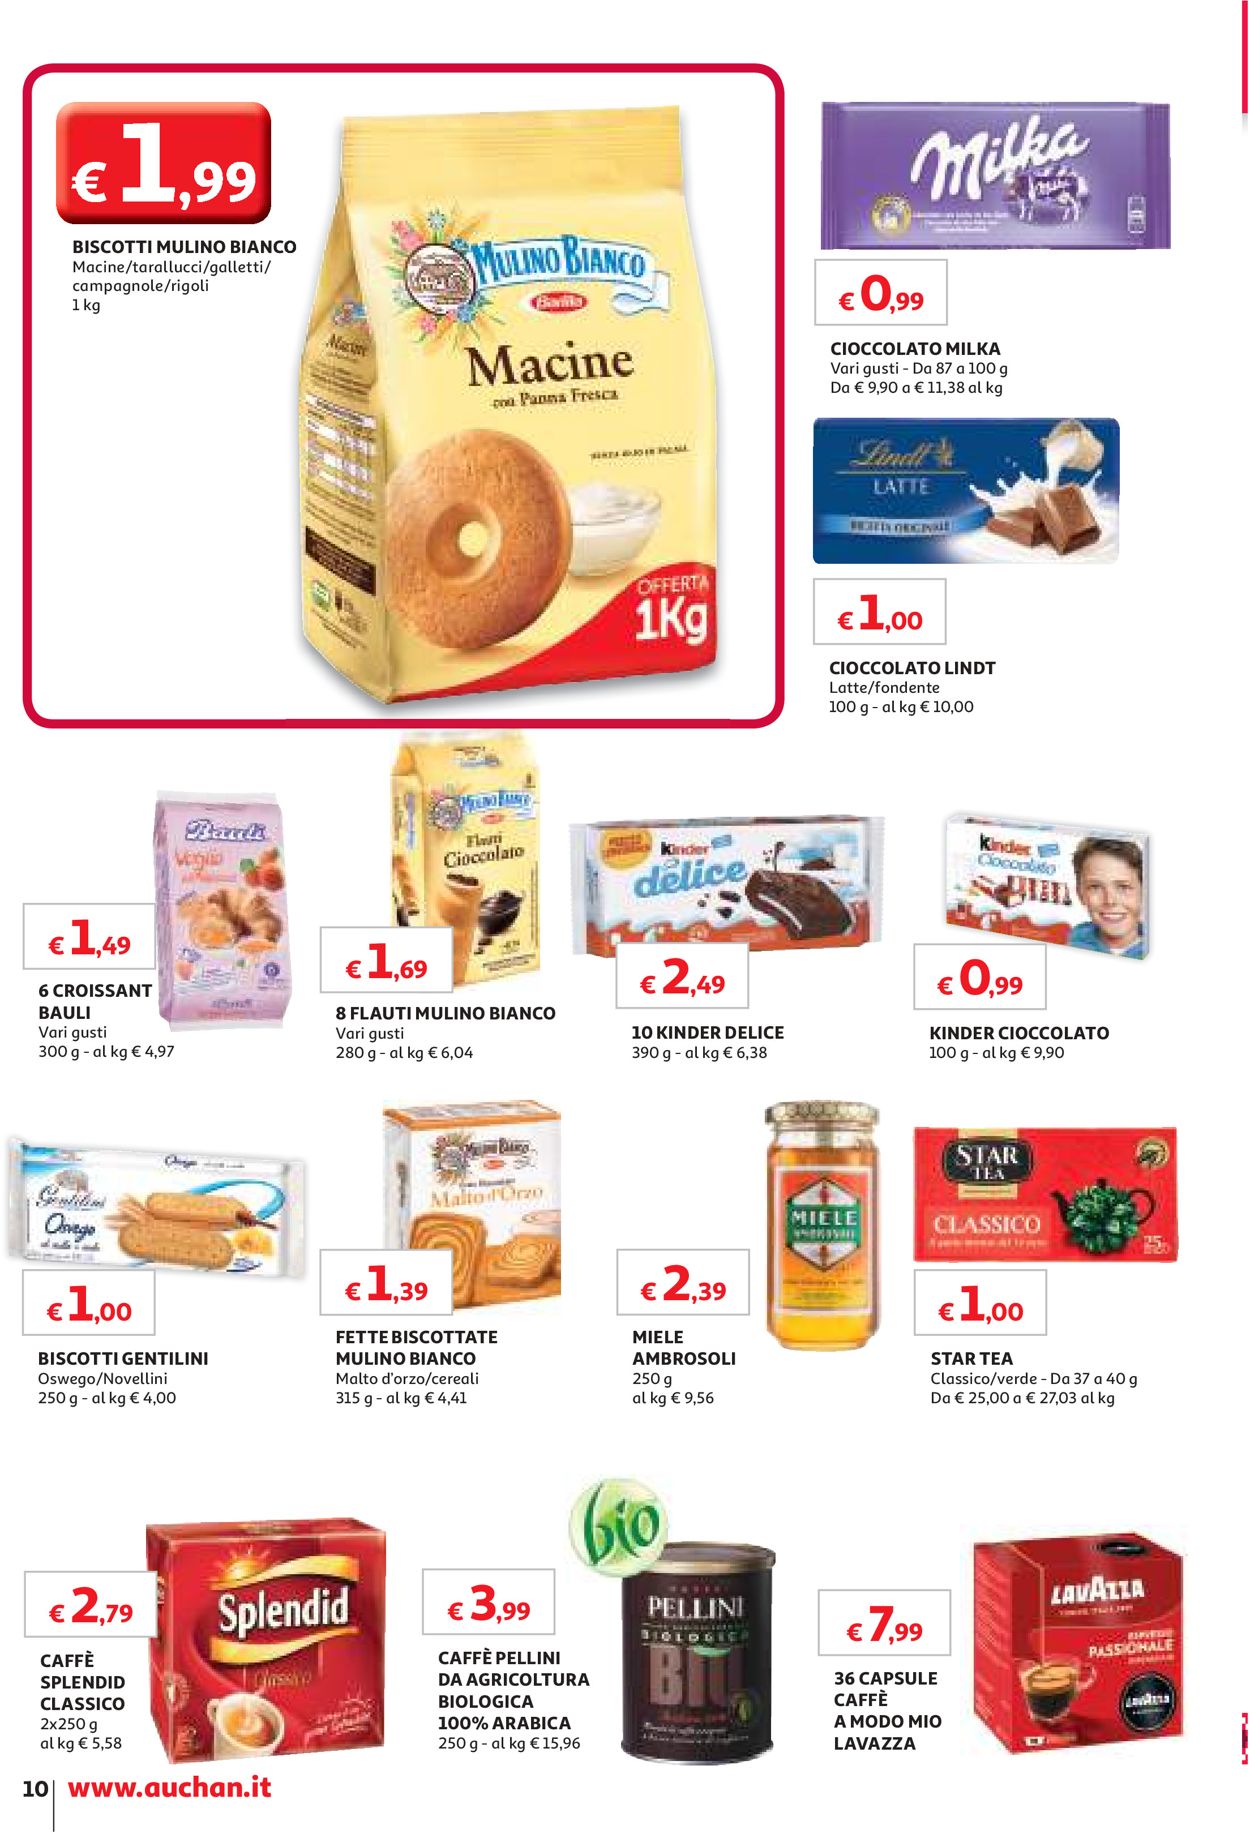 Volantino Auchan - Offerte 25/11-01/12/2019 (Pagina 10)